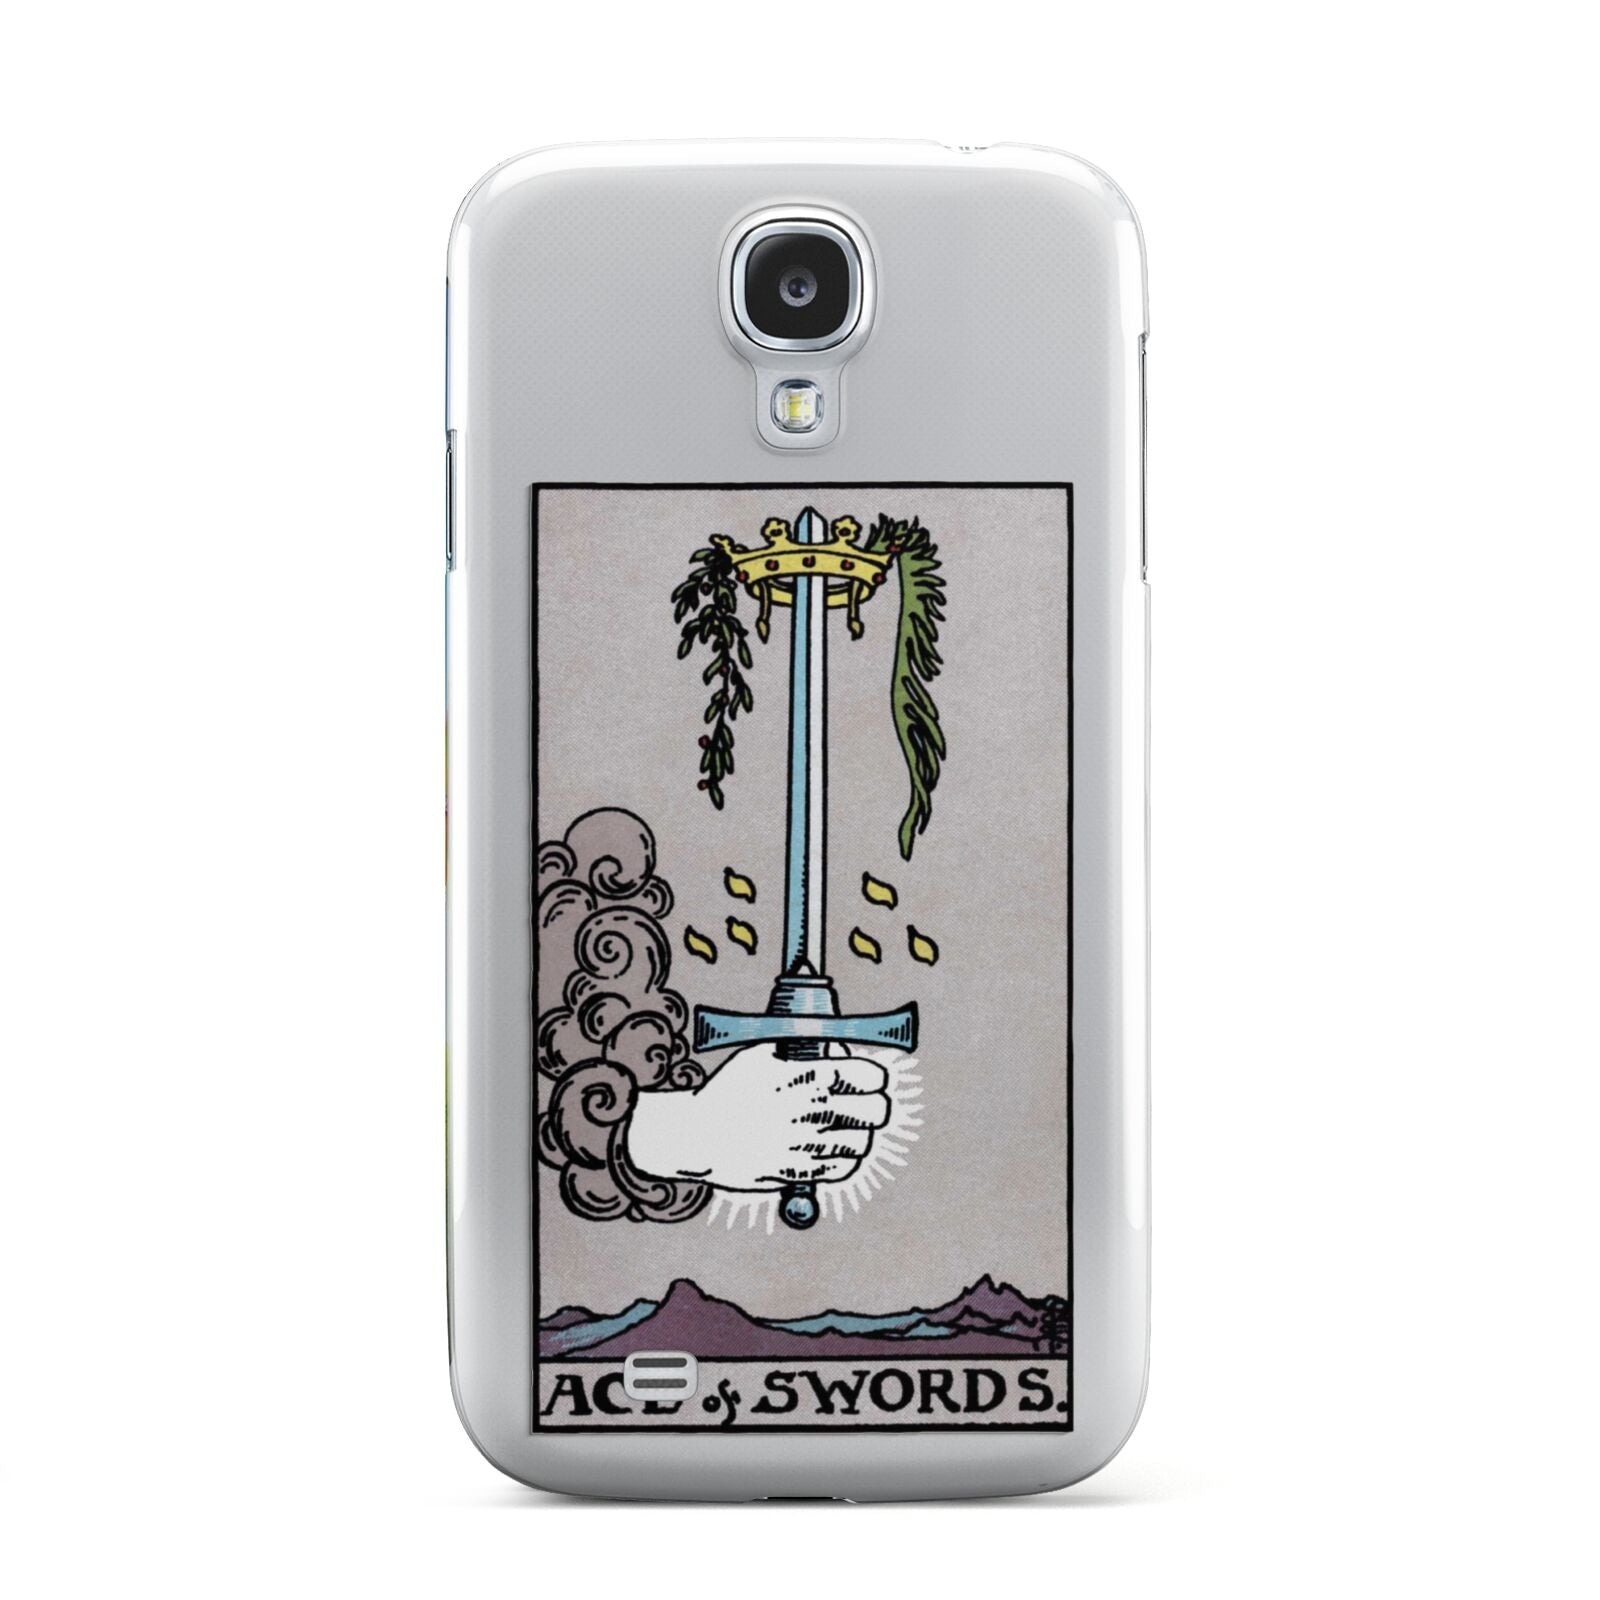 Ace of Swords Tarot Card Samsung Galaxy S4 Case